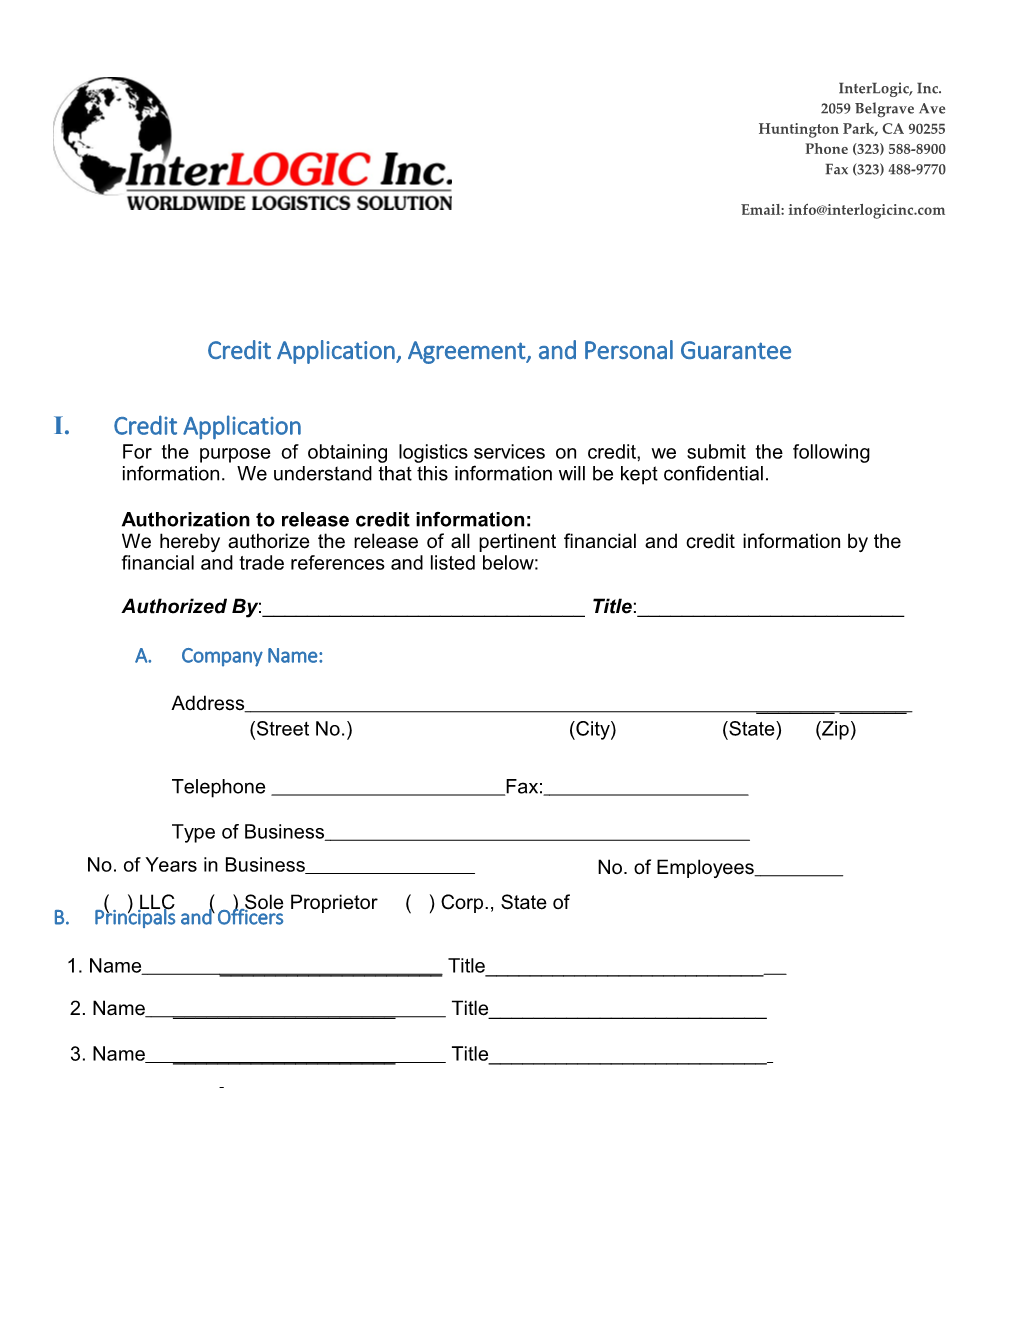 Creditapplication,Agreement, Andpersonal Guarantee